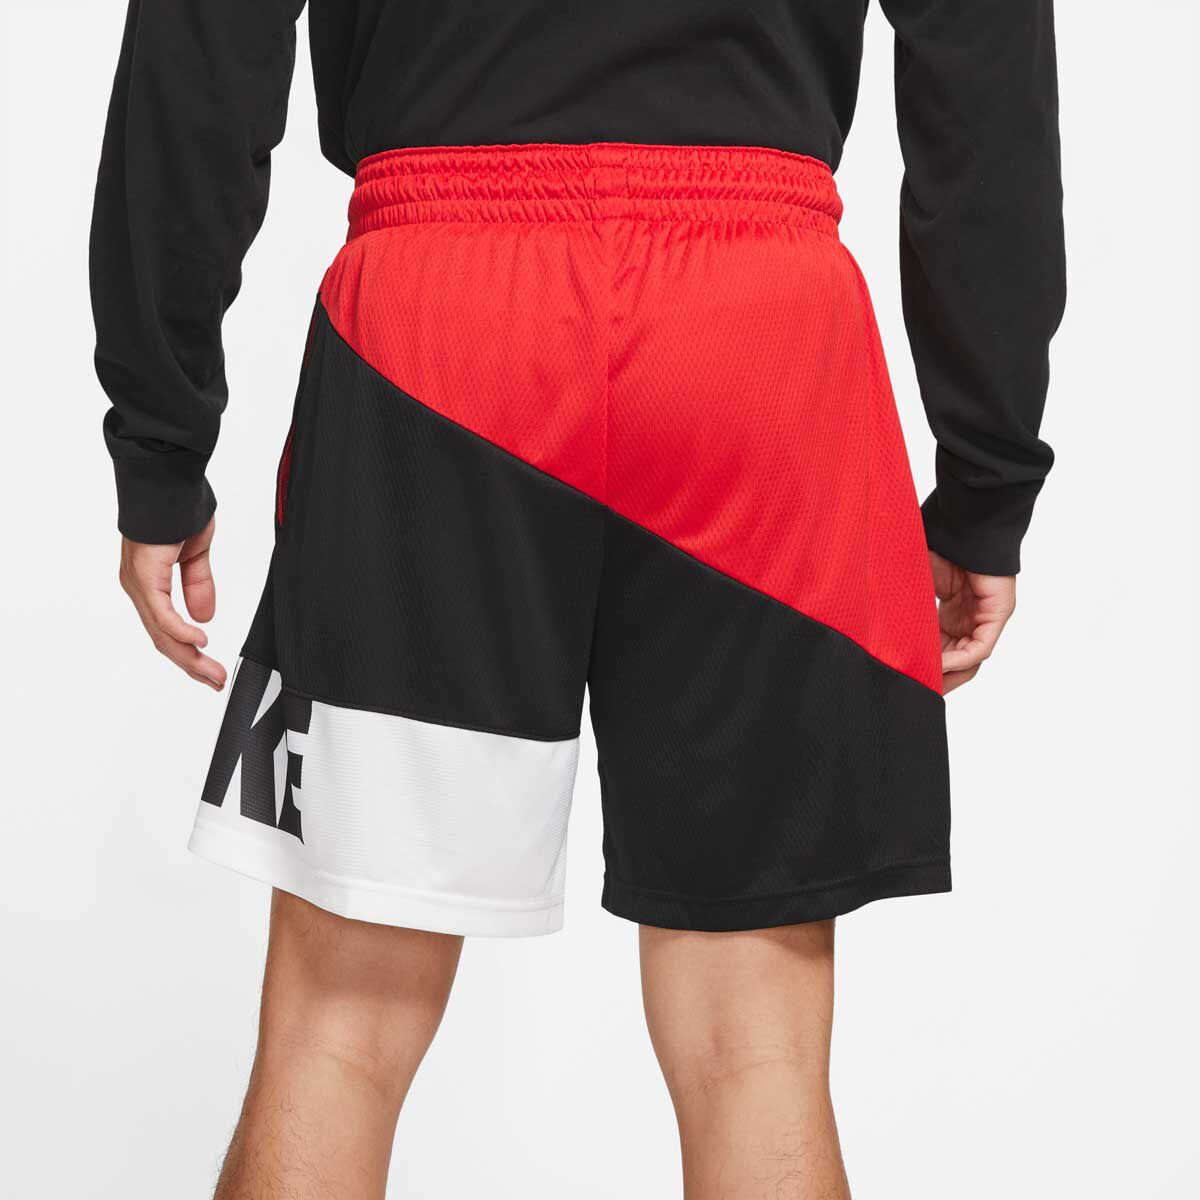 men's dri fit basketball shorts